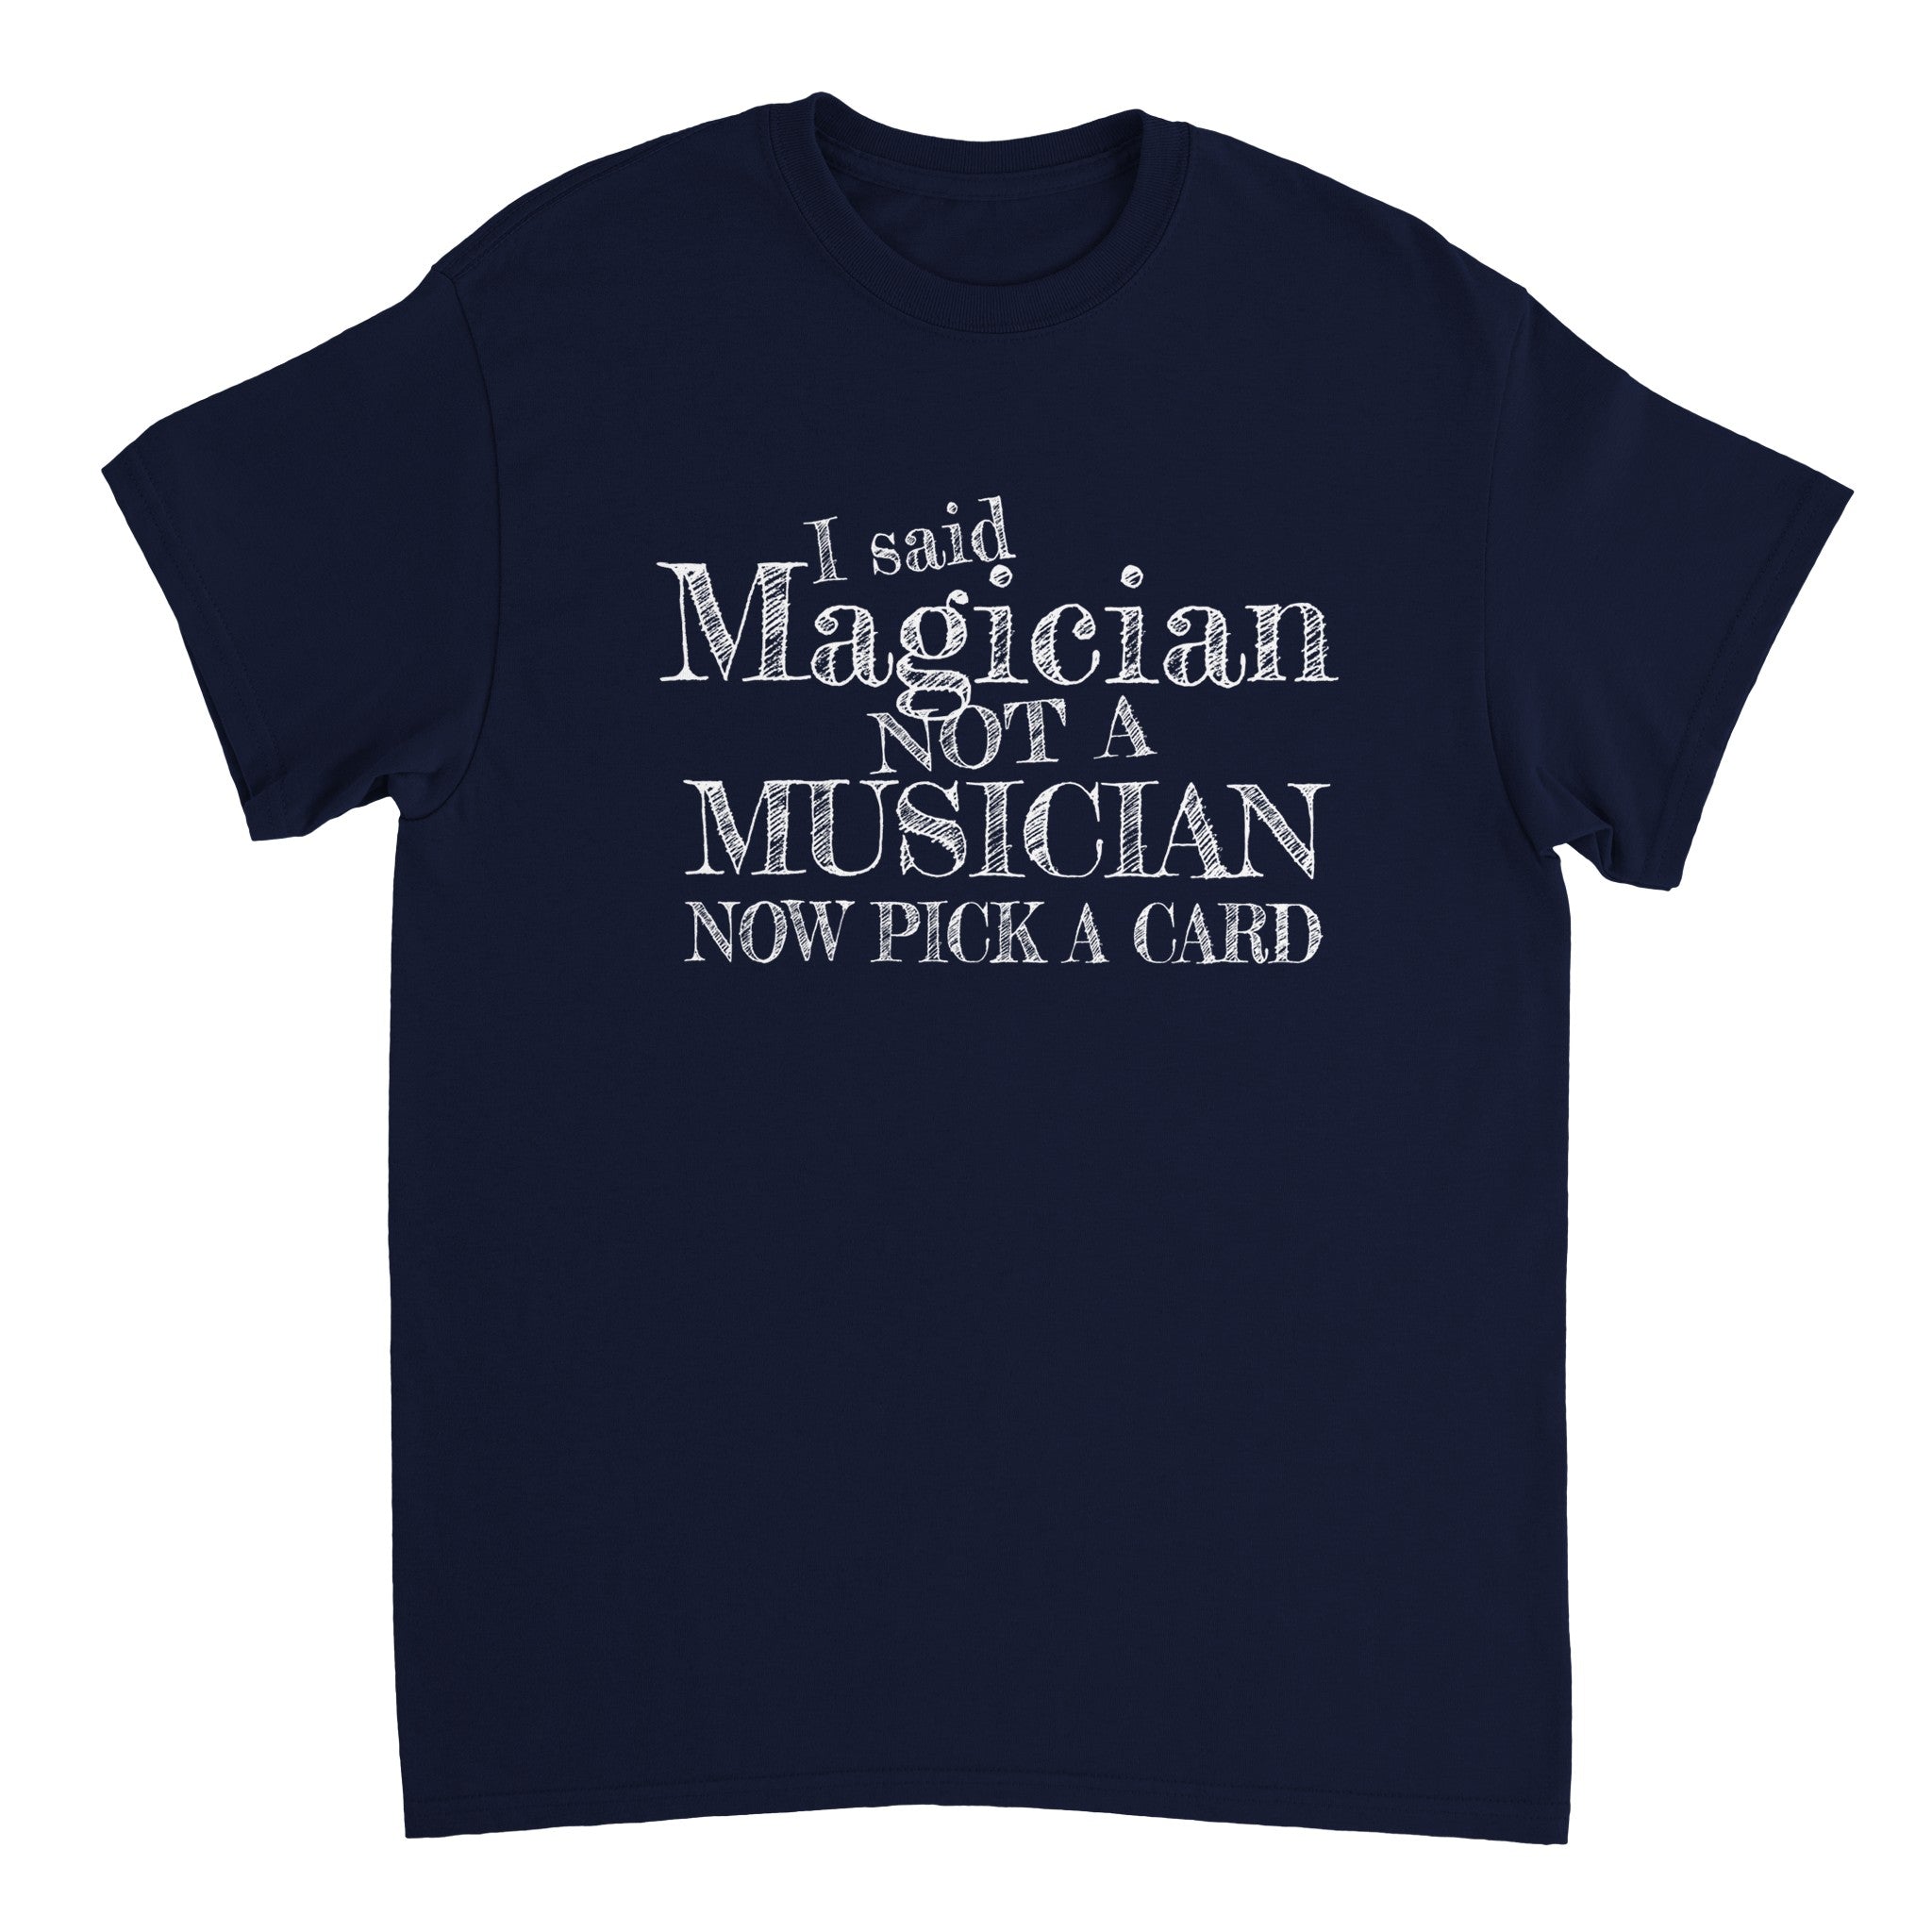 "I SAID MAGICIAN" KID FRIENDLY - JOKE T-shirt